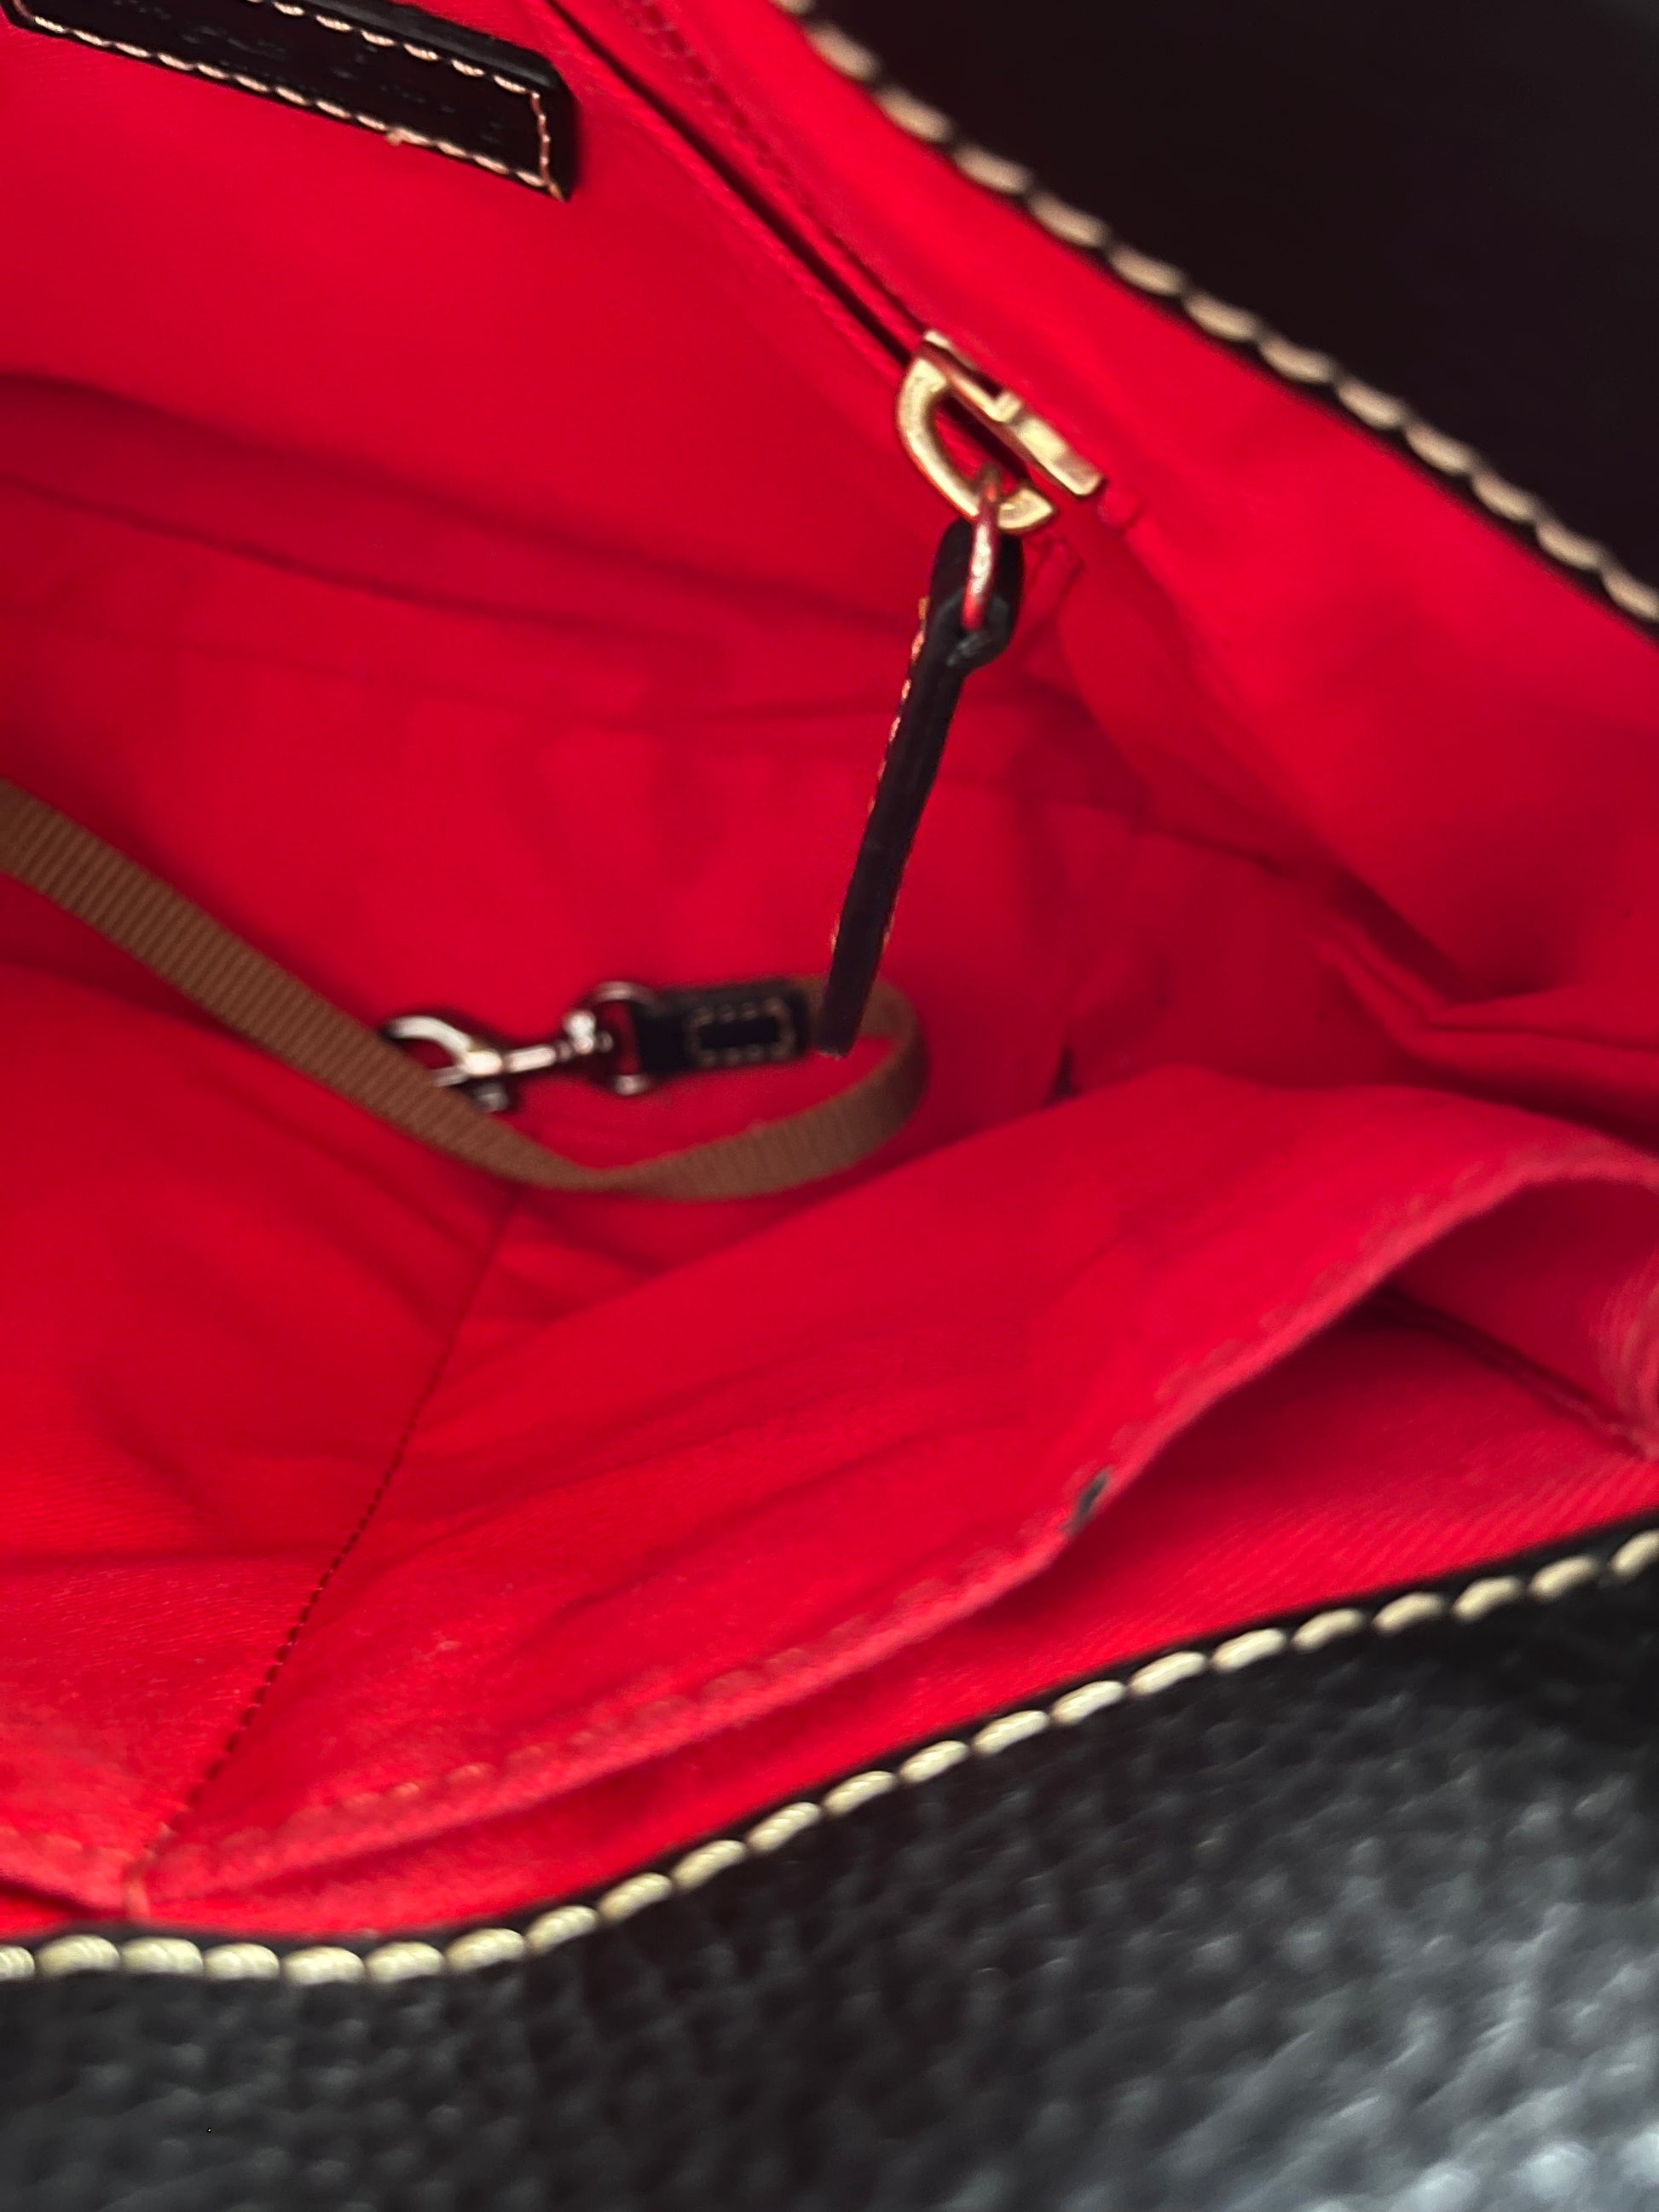 Dooney & Bourke Saffiano Small Leather Crossbody Bag - Black